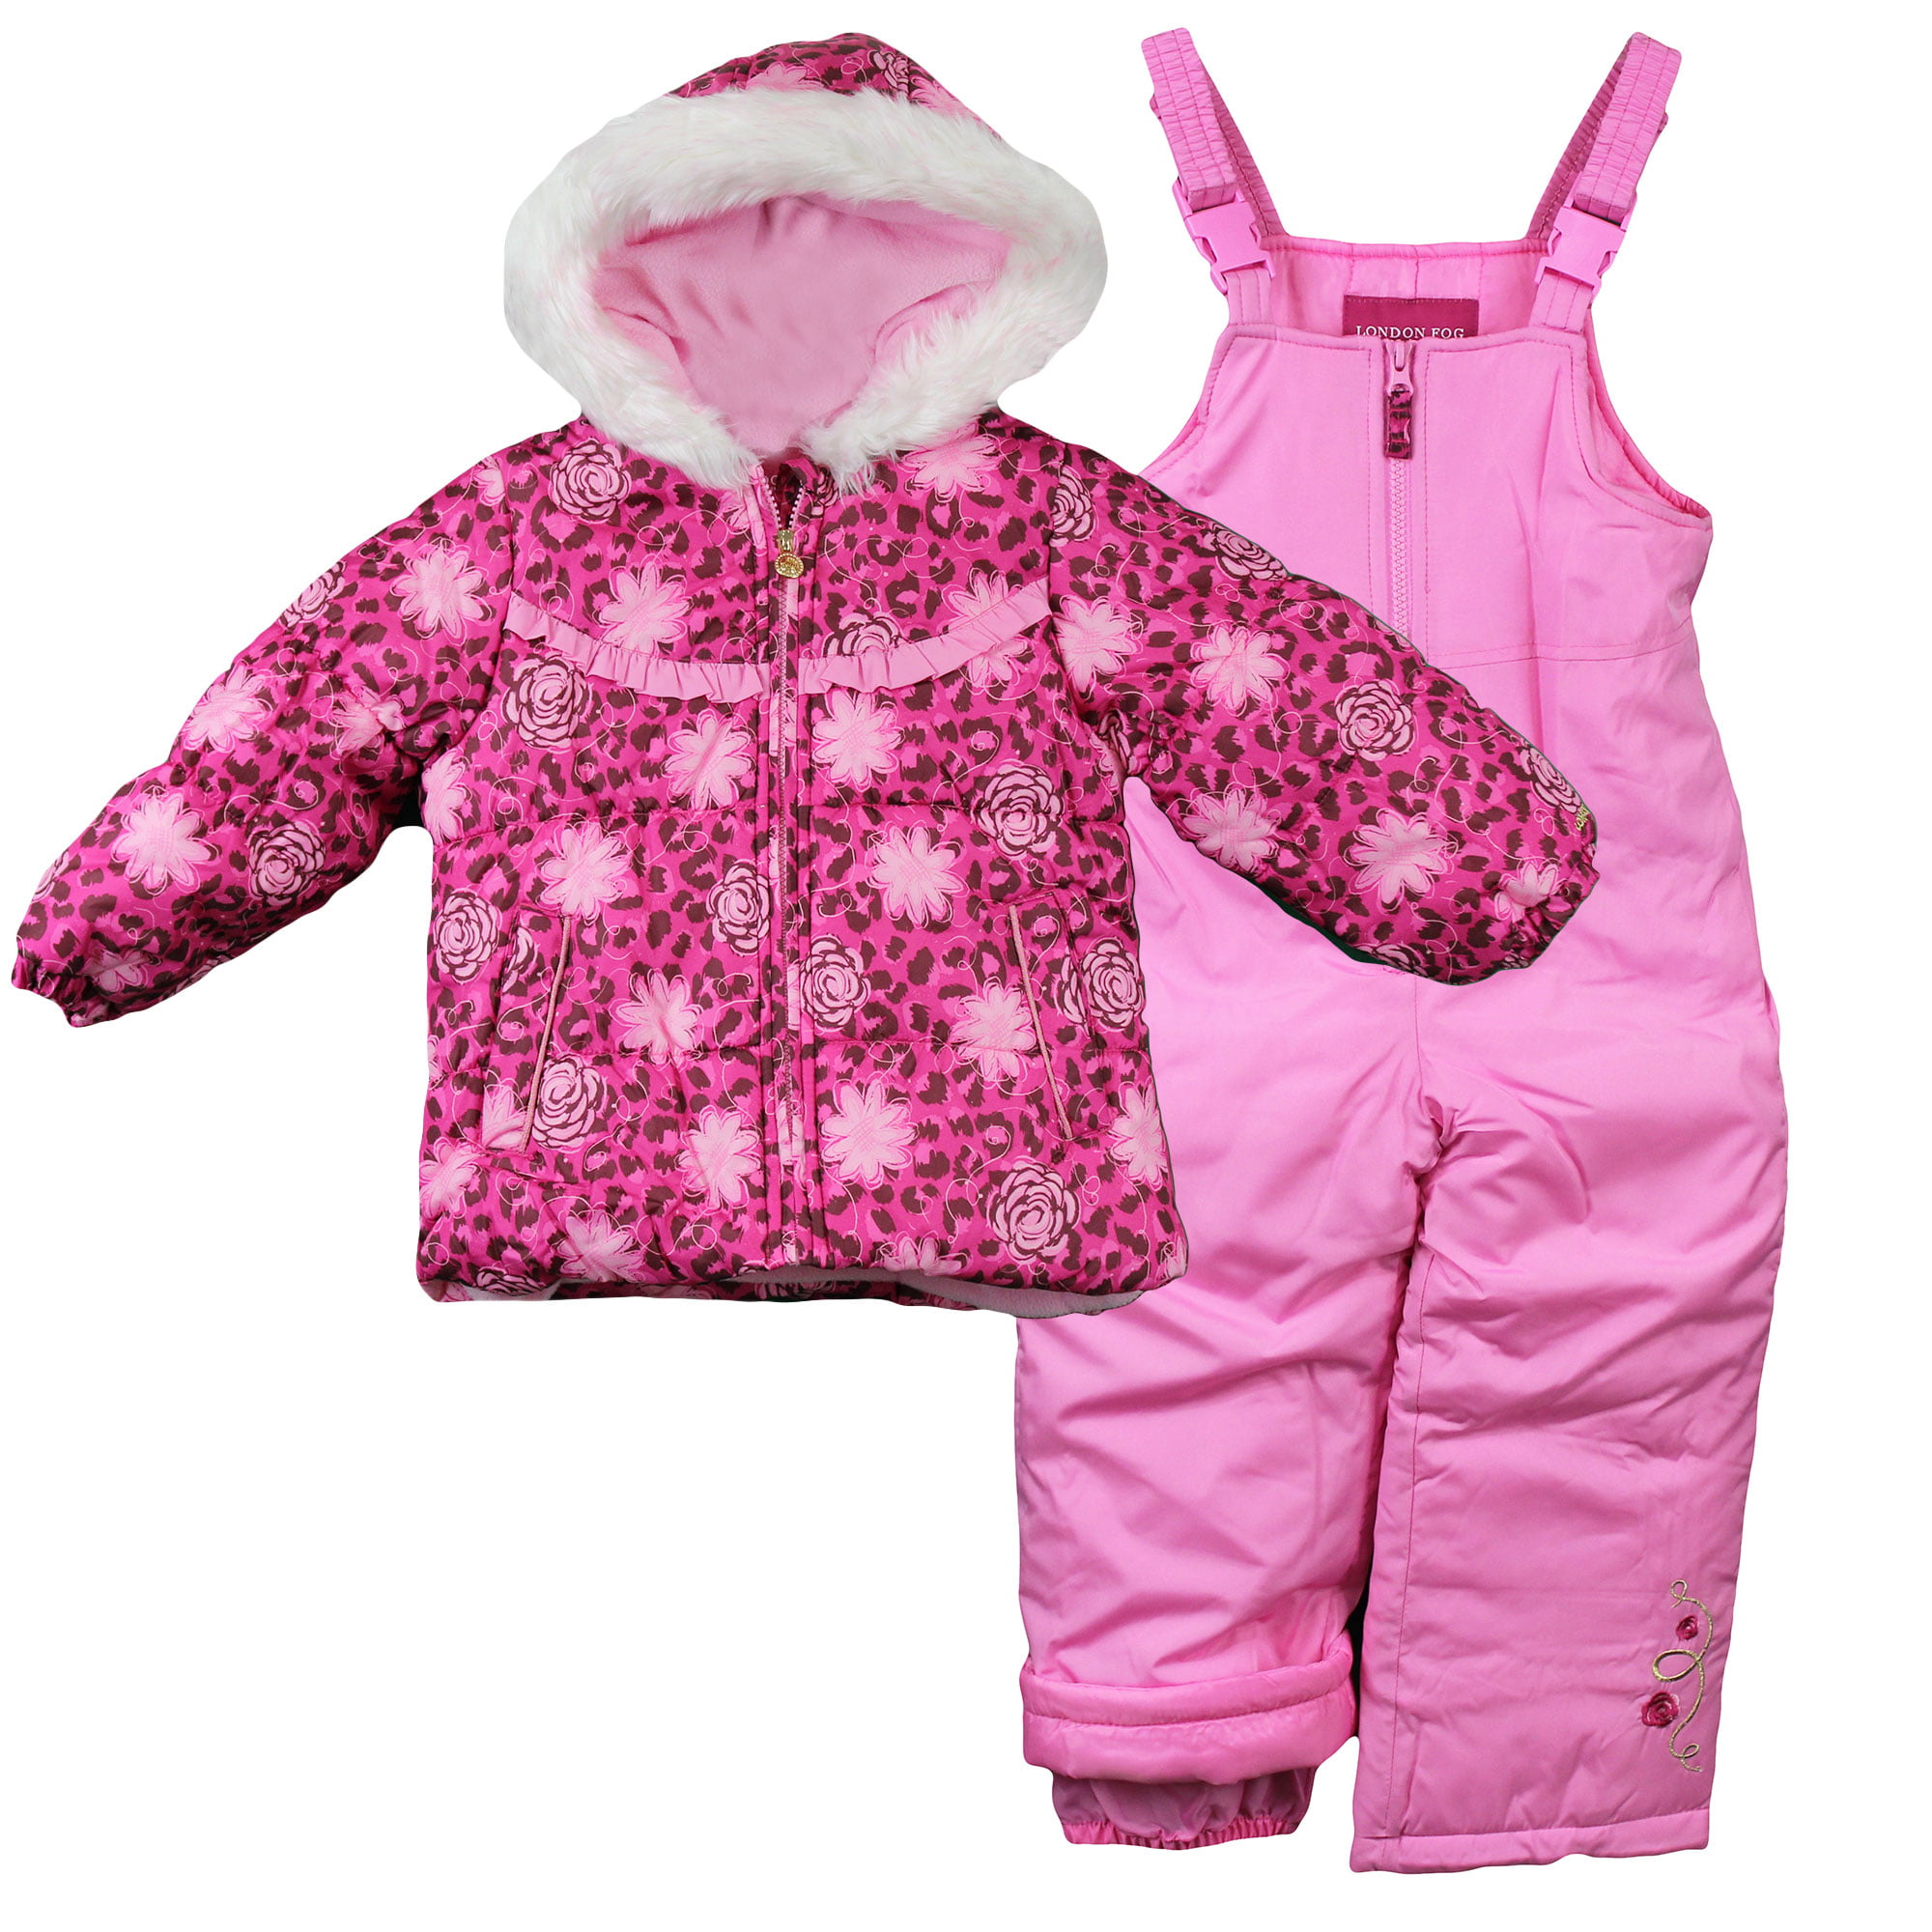 London Fog Toddler Girls Winter Snowsuit Warm Jacket and Snow 